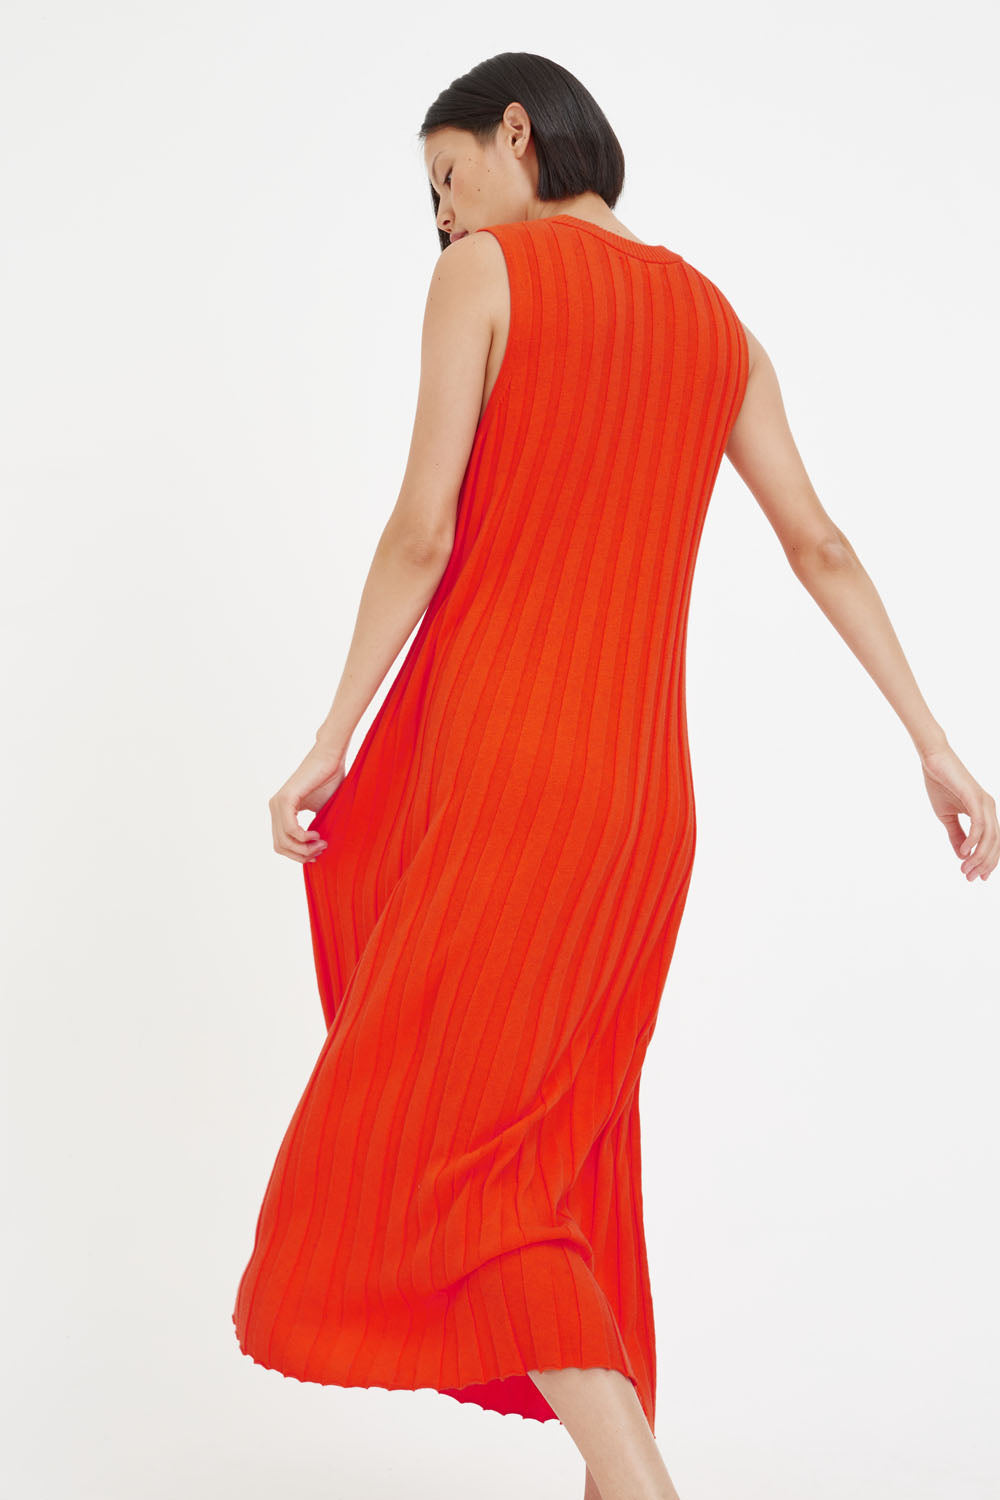 Orange Ribbed Cotton-Cashmere Dress